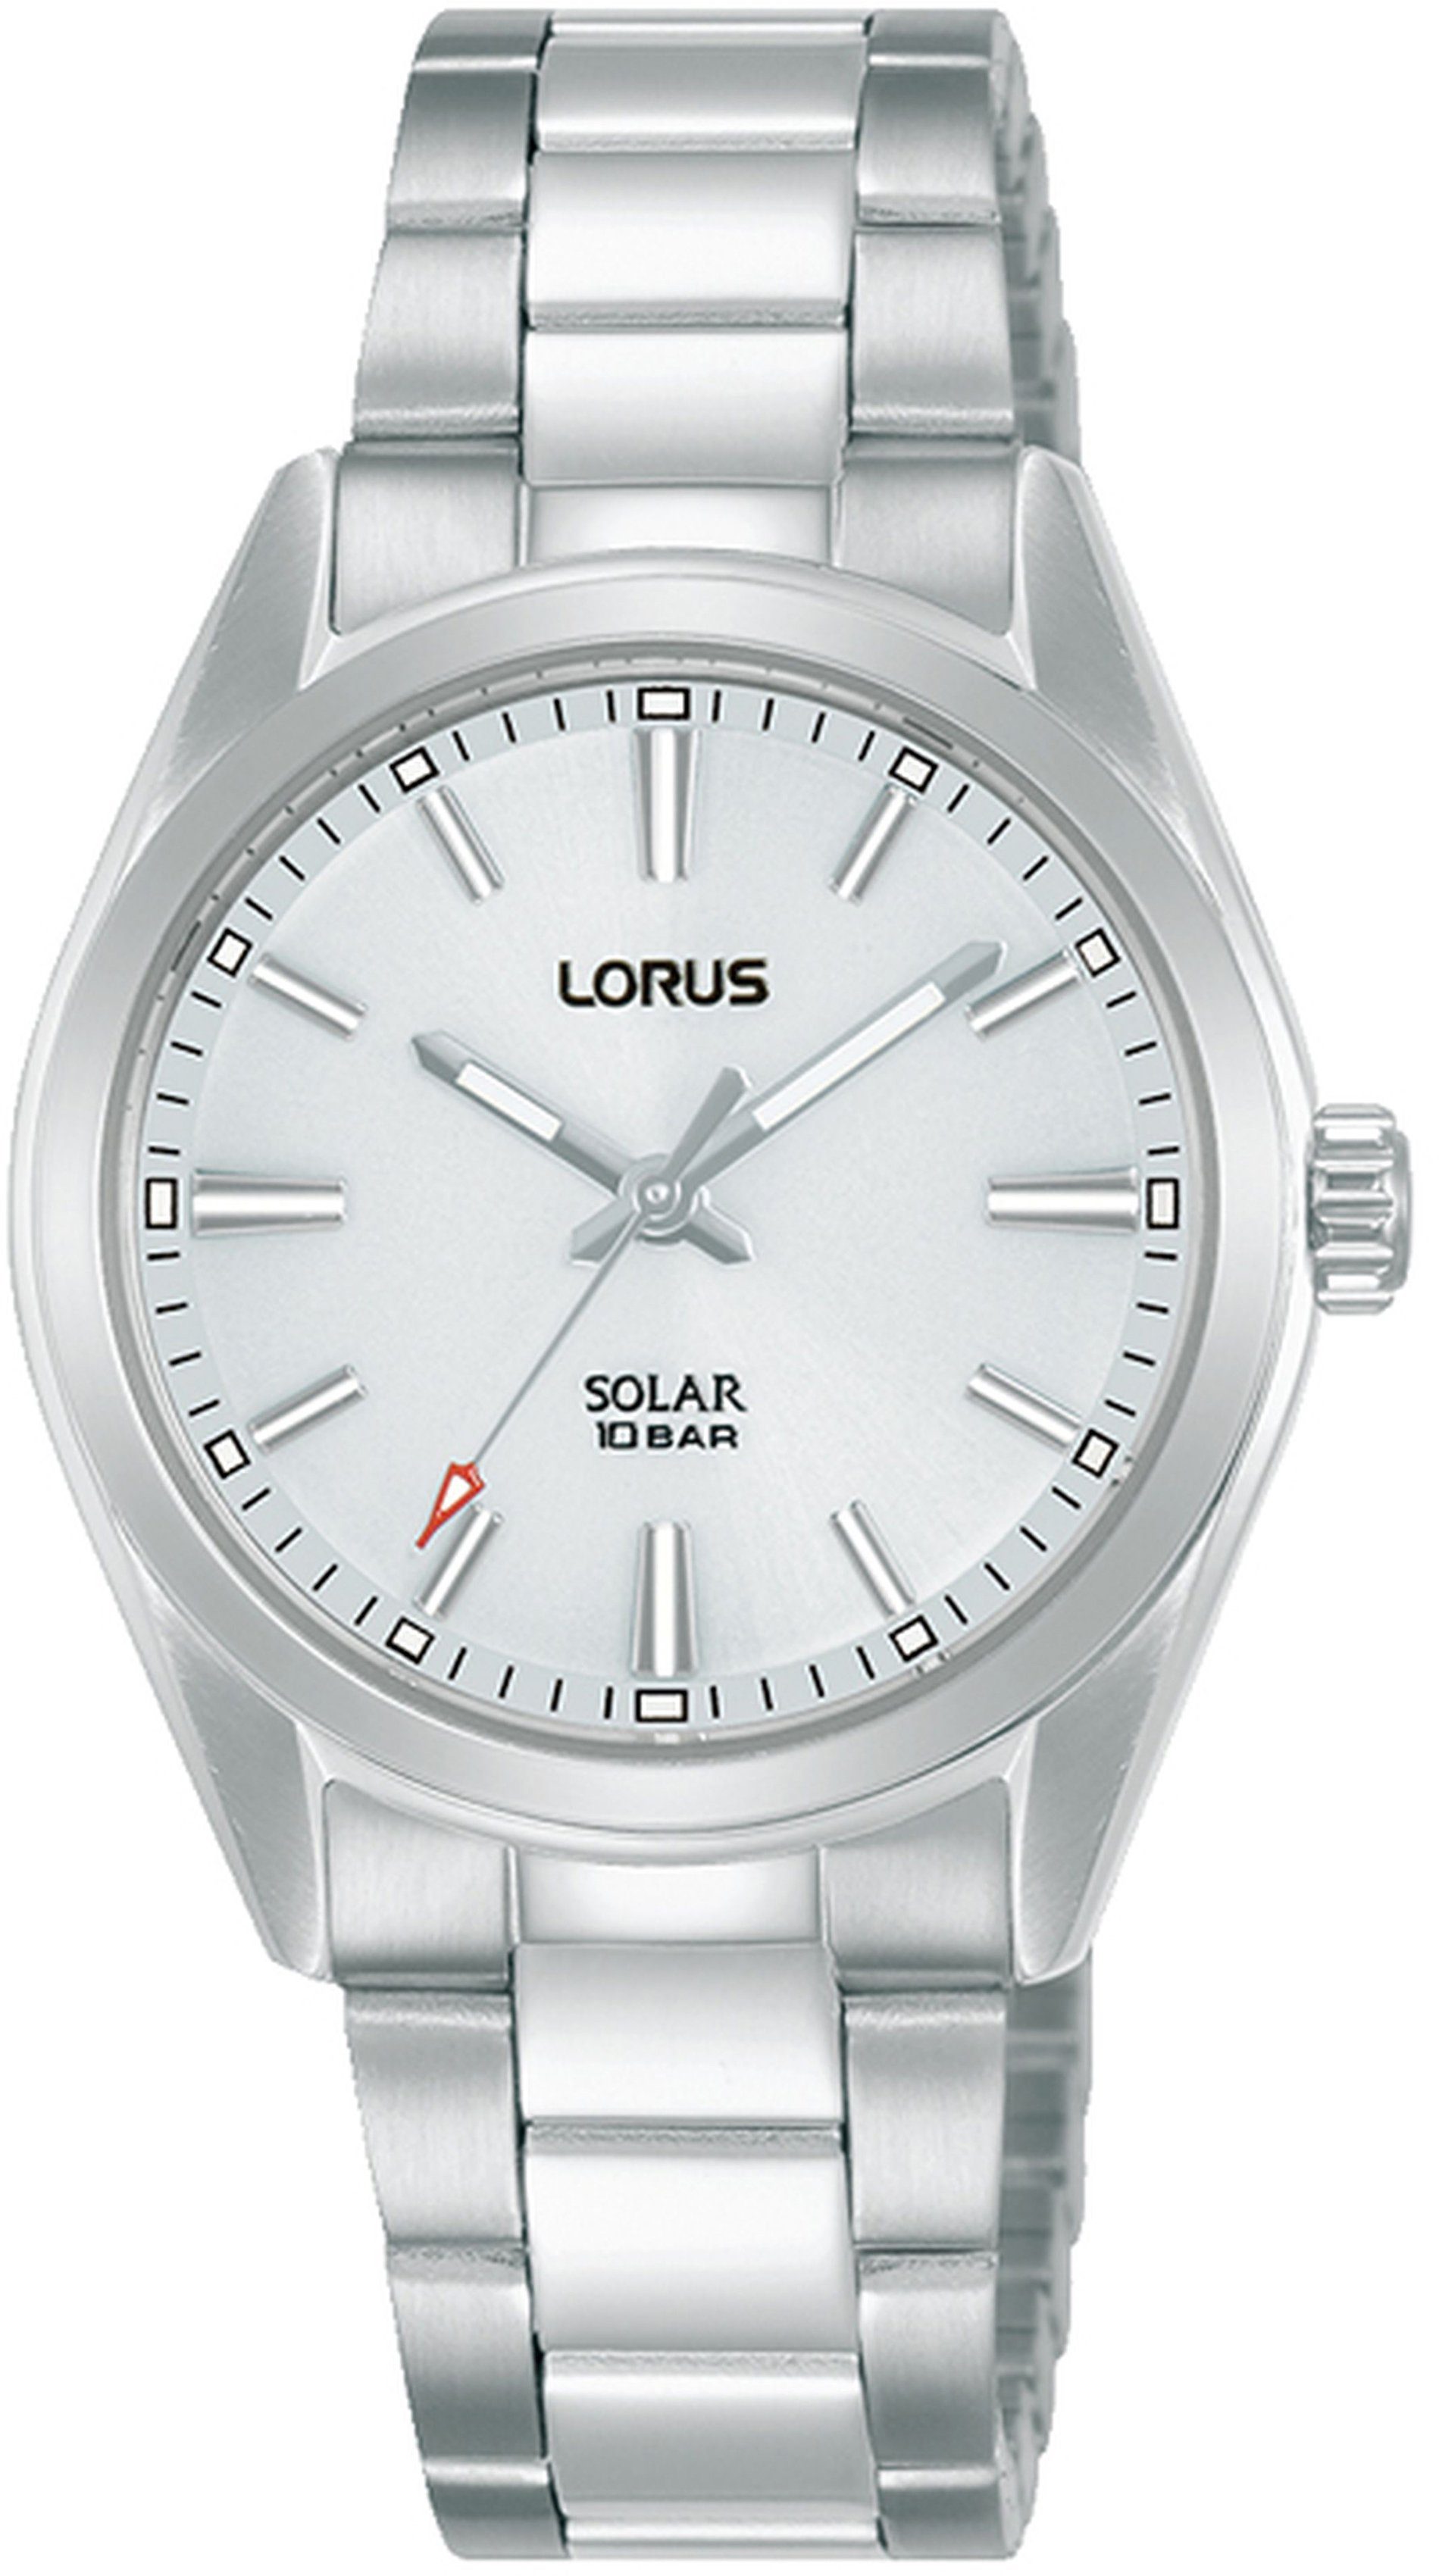 LORUS Solaruhr RY503AX9, Armbanduhr, Damenuhr